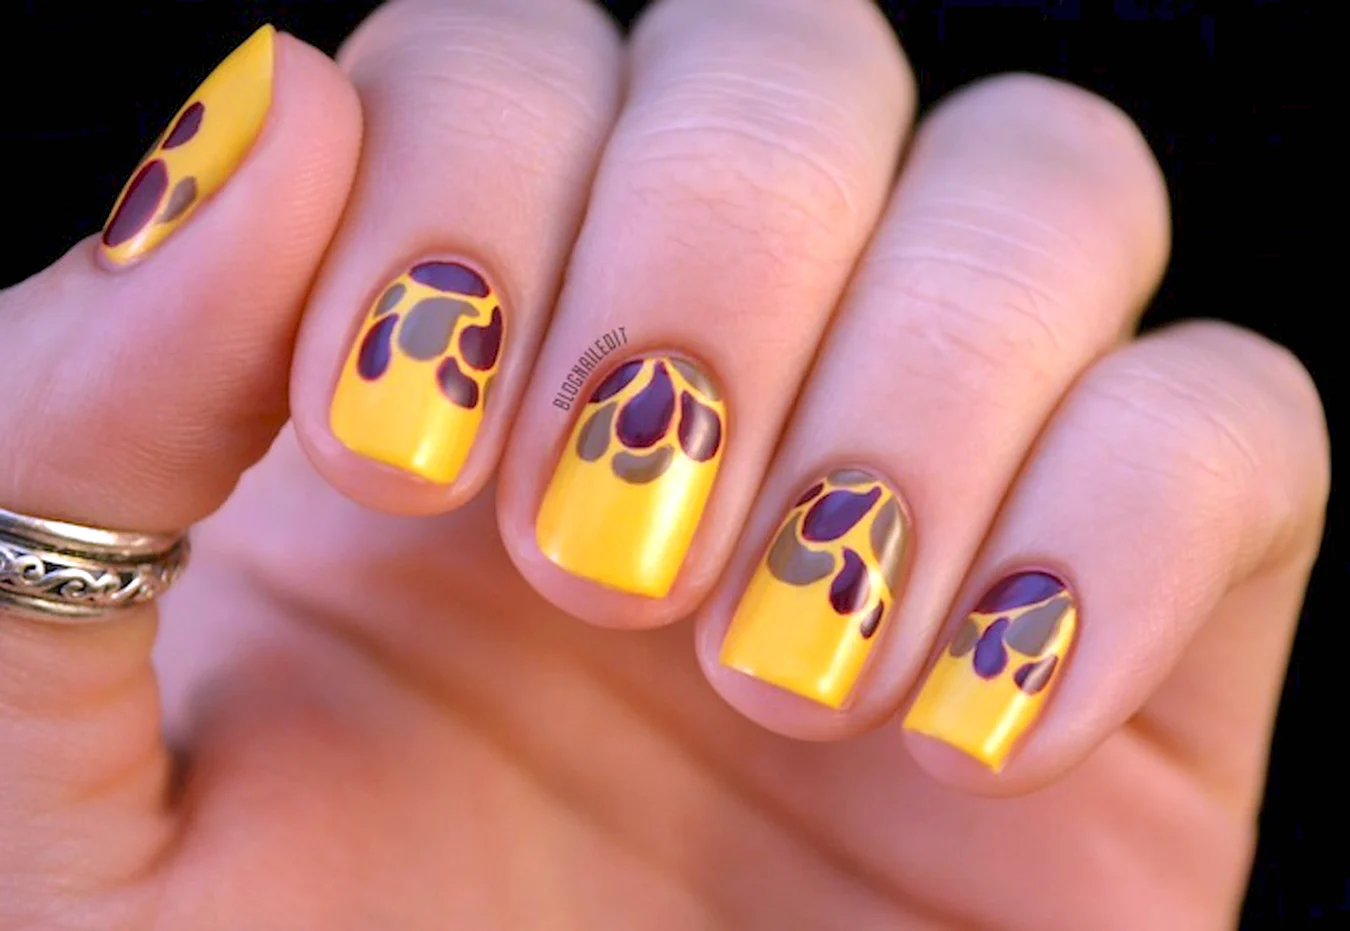 Ногти в желто коричневом цвете